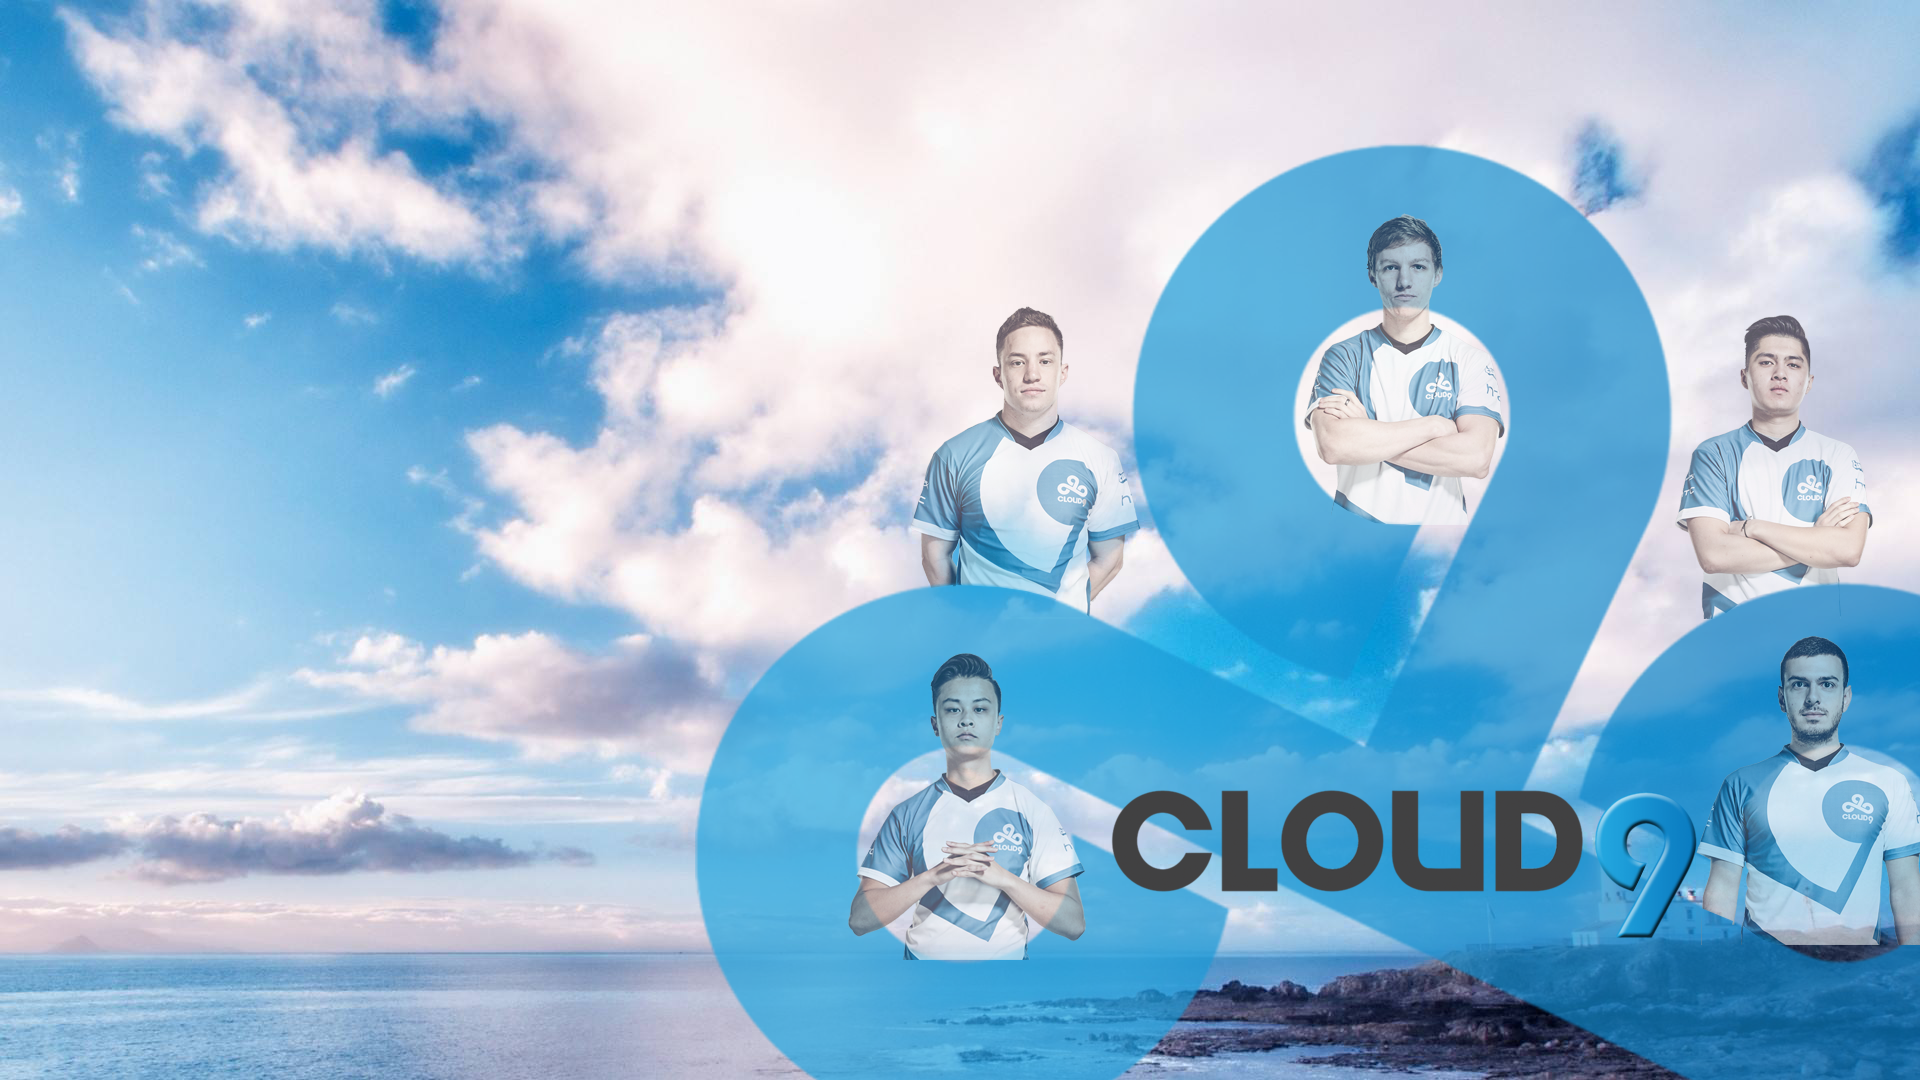 Cloud9 wallpaper